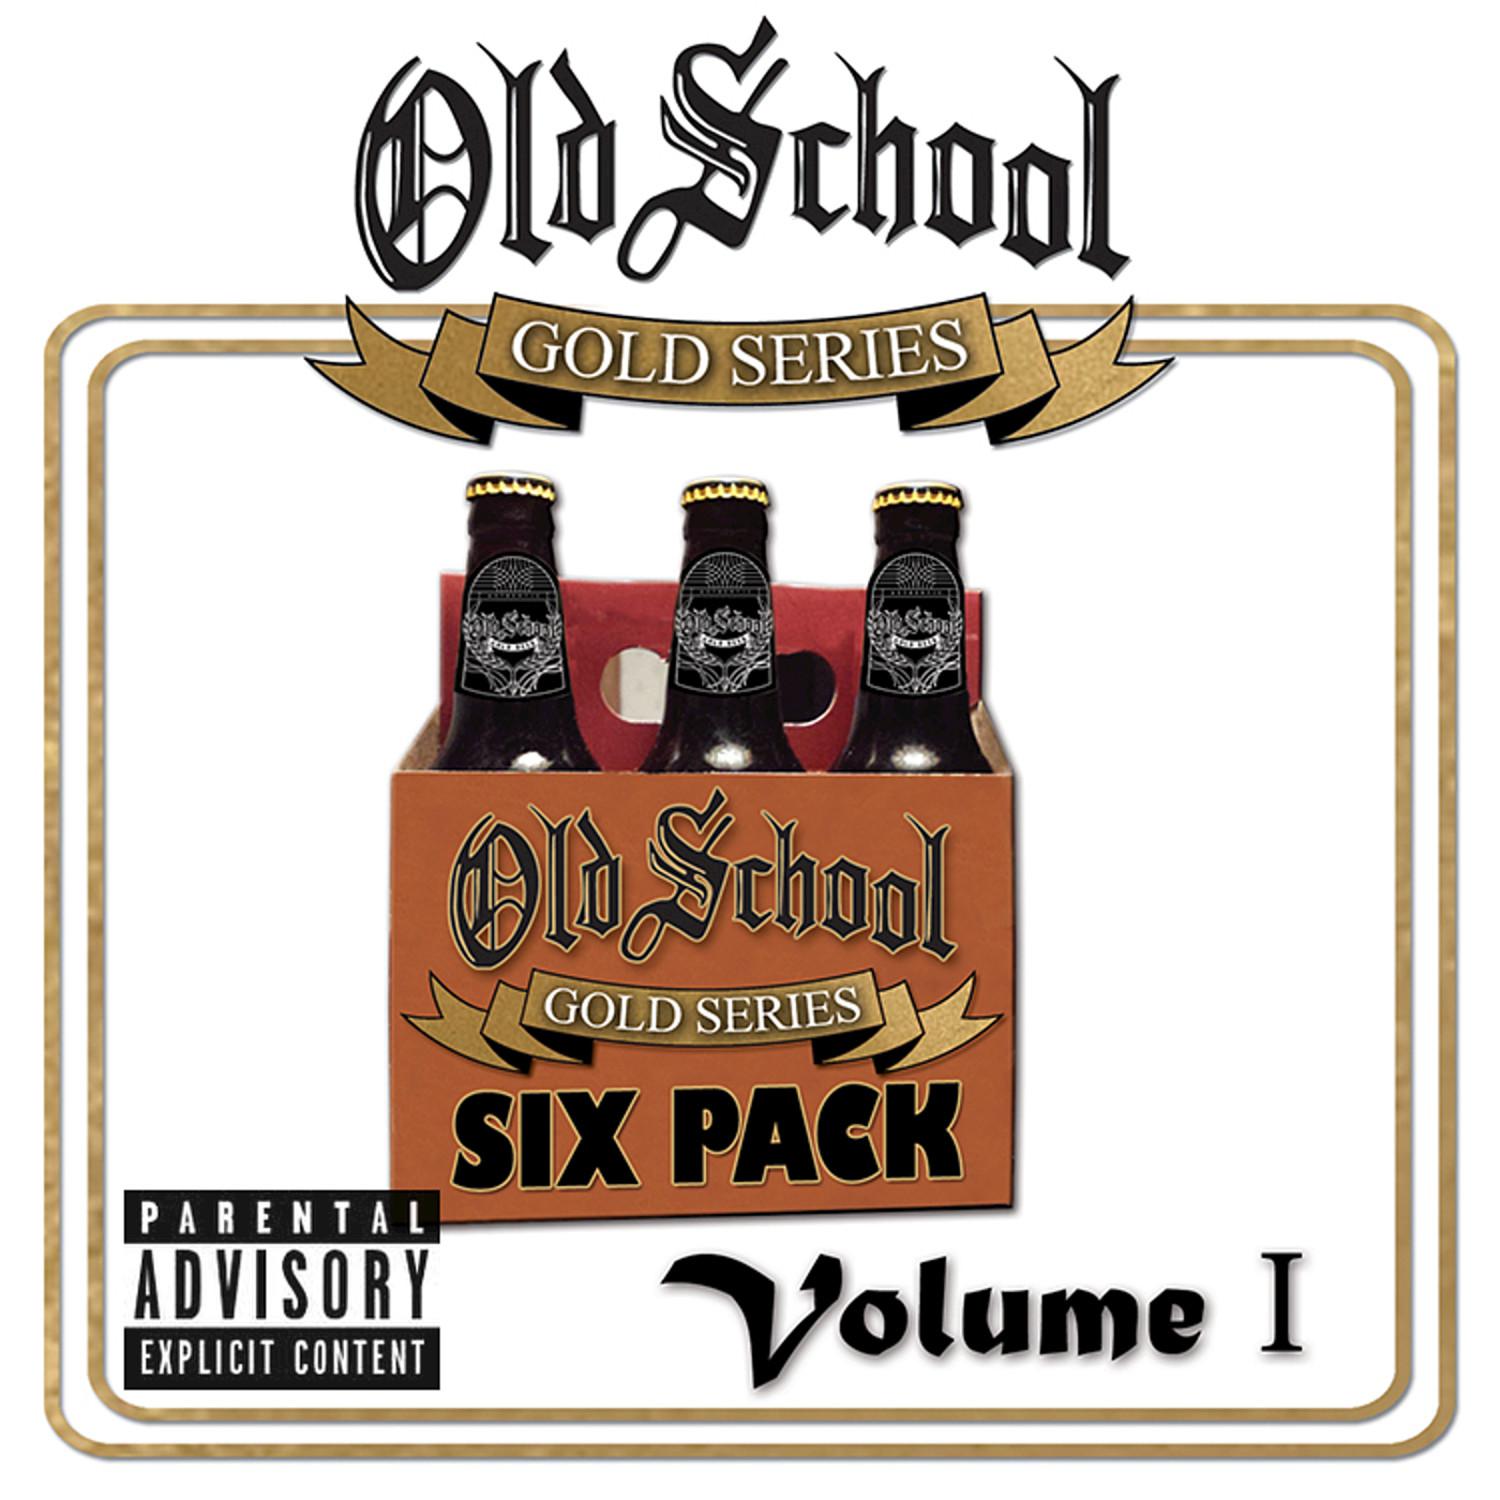 Old School Gold Series Six Pack Volume 1